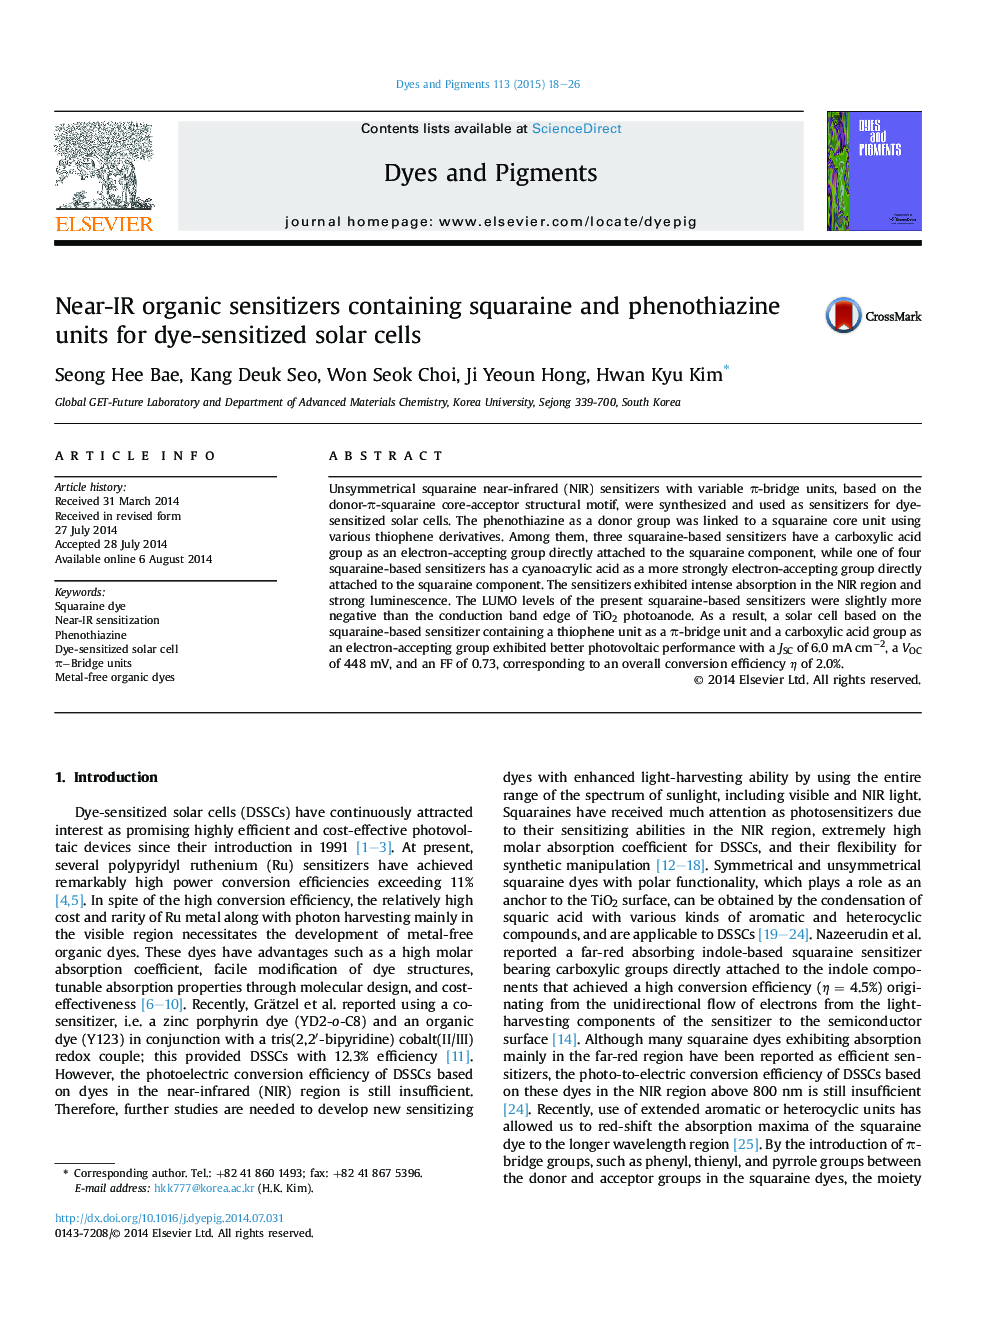 Near-IR organic sensitizers containing squaraine and phenothiazine units for dye-sensitized solar cells